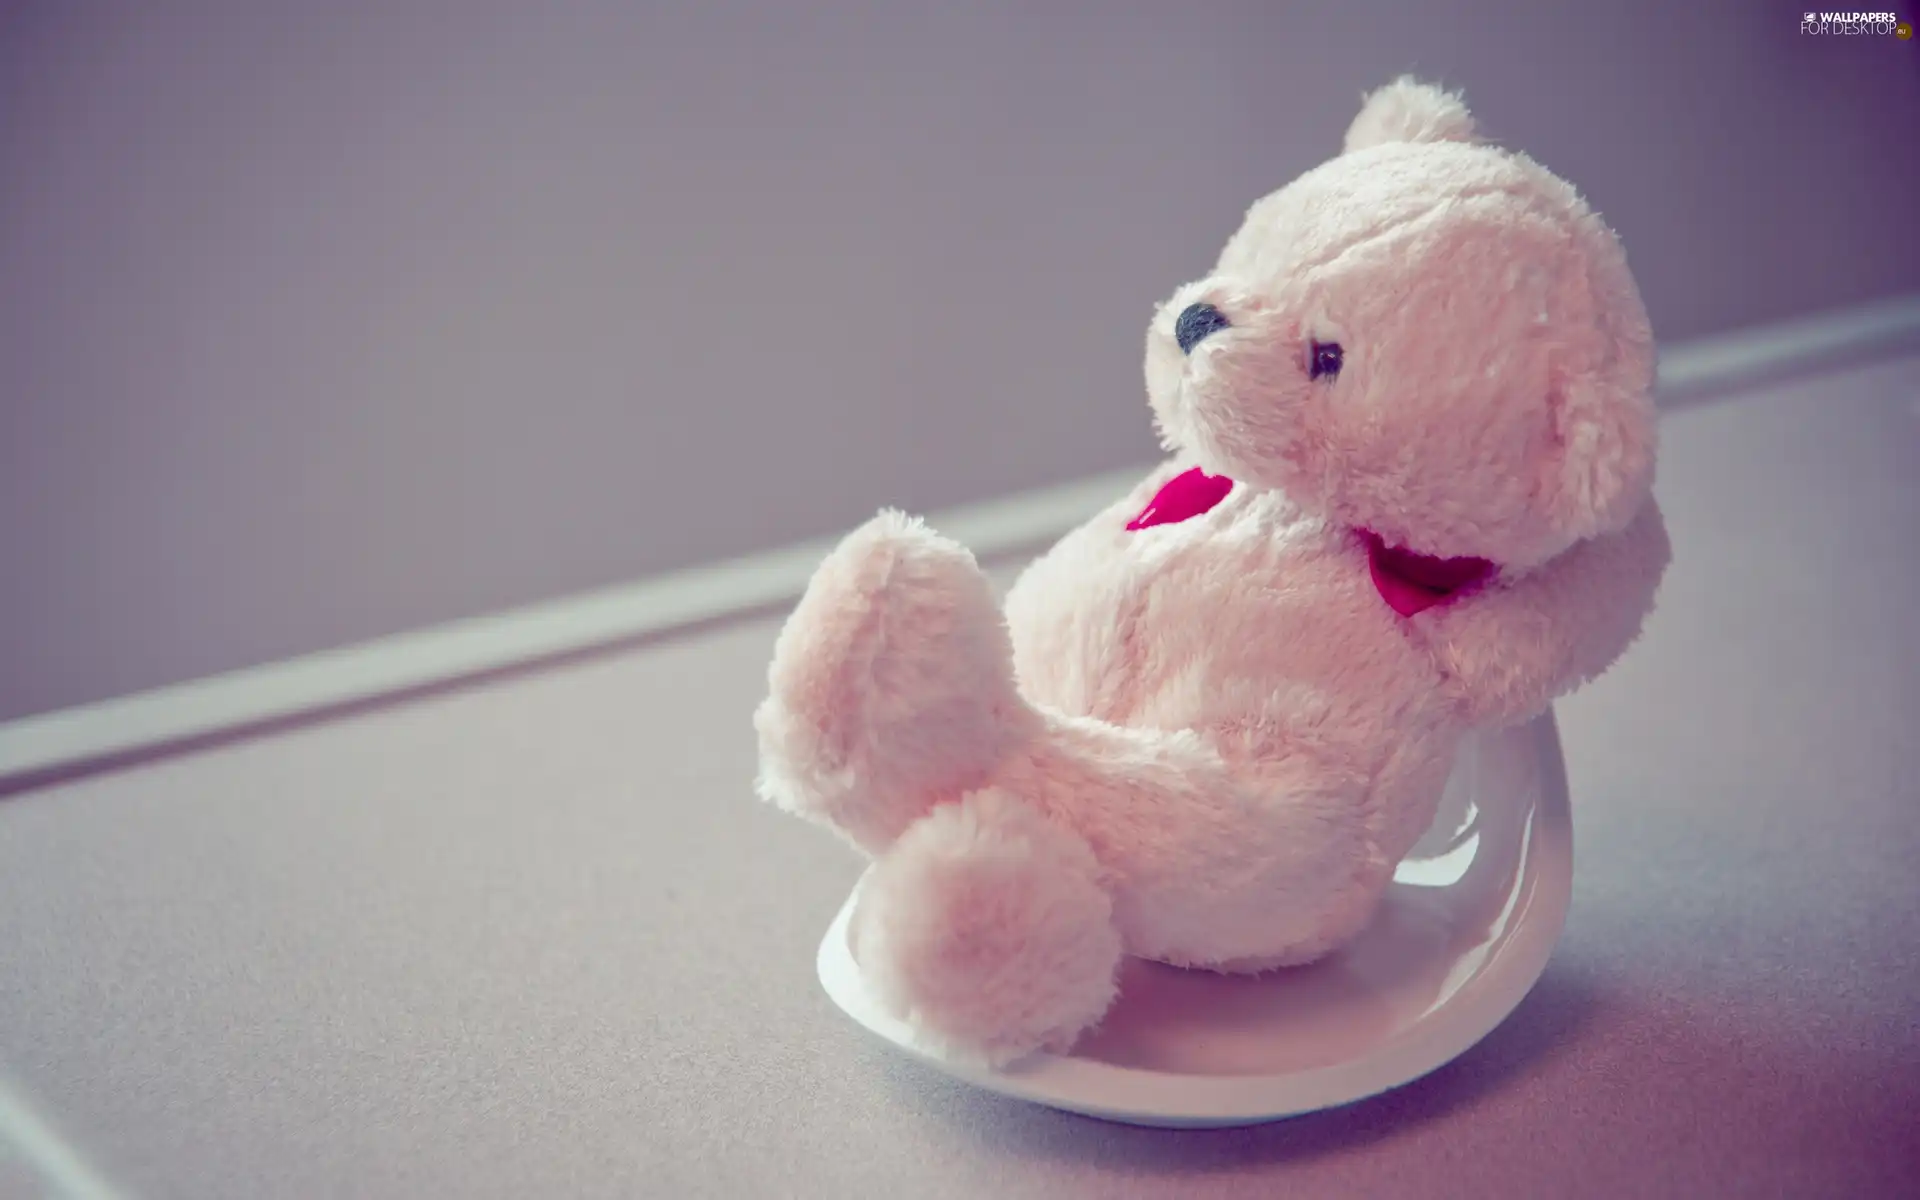 teddy bear, White, Plush